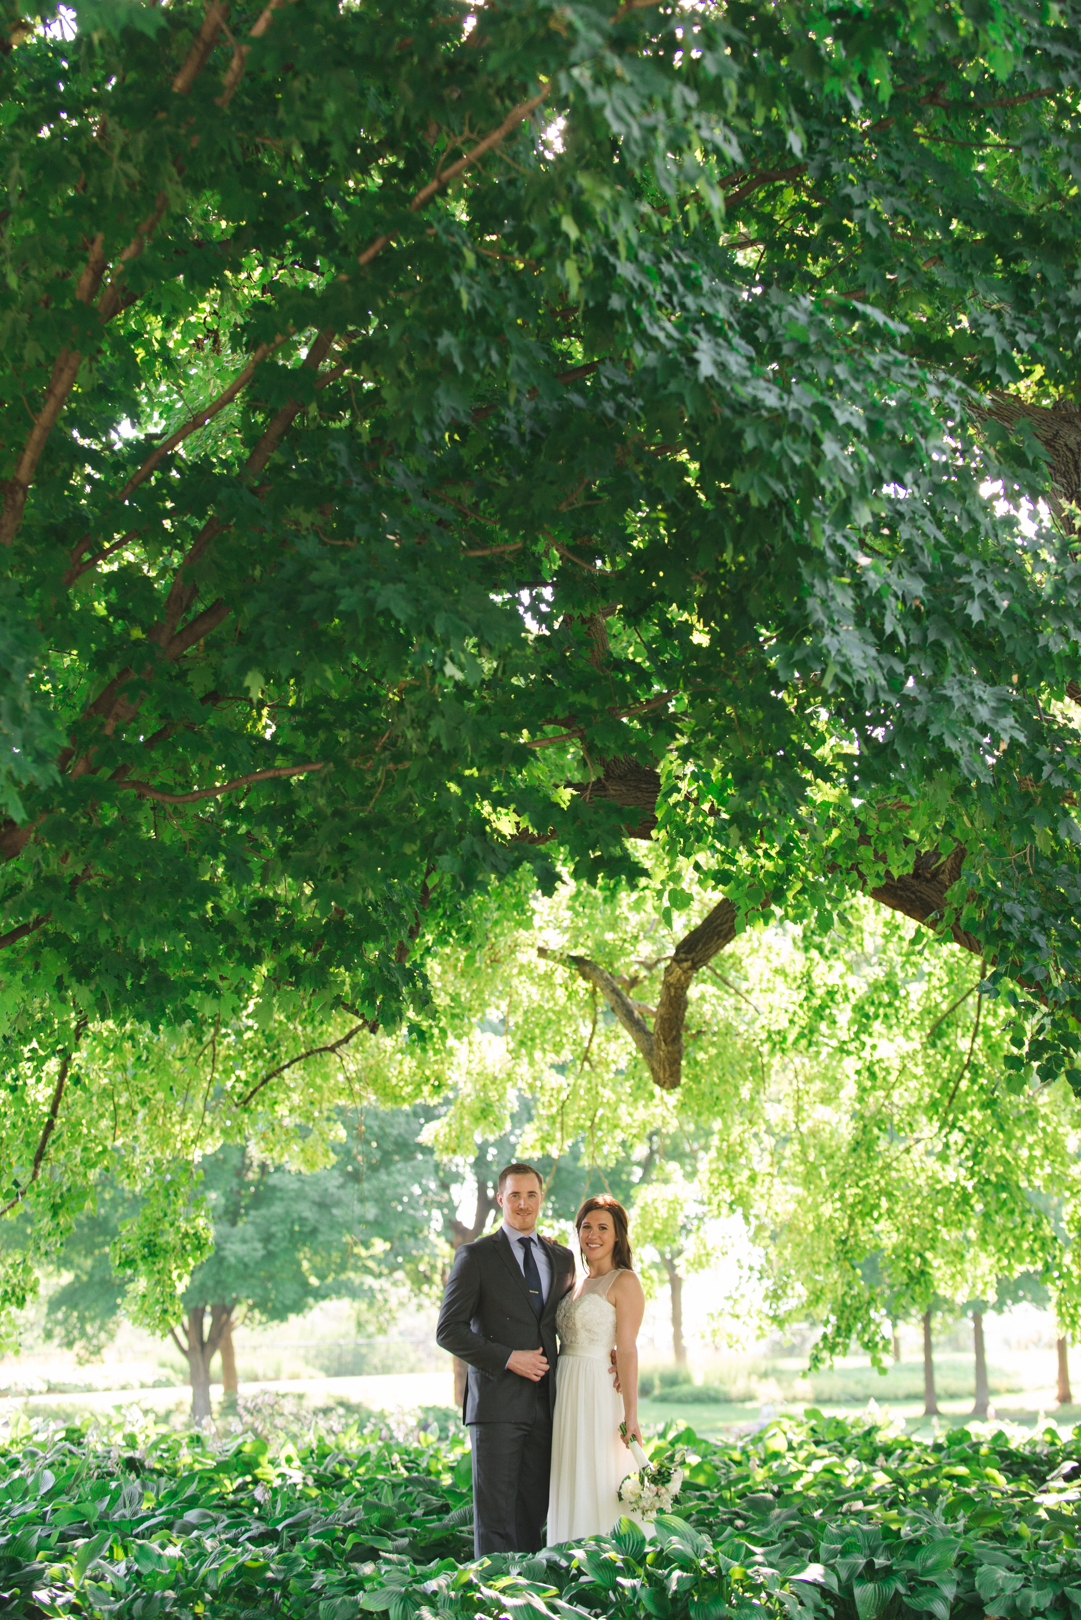 Majors Hill Park wedding photos